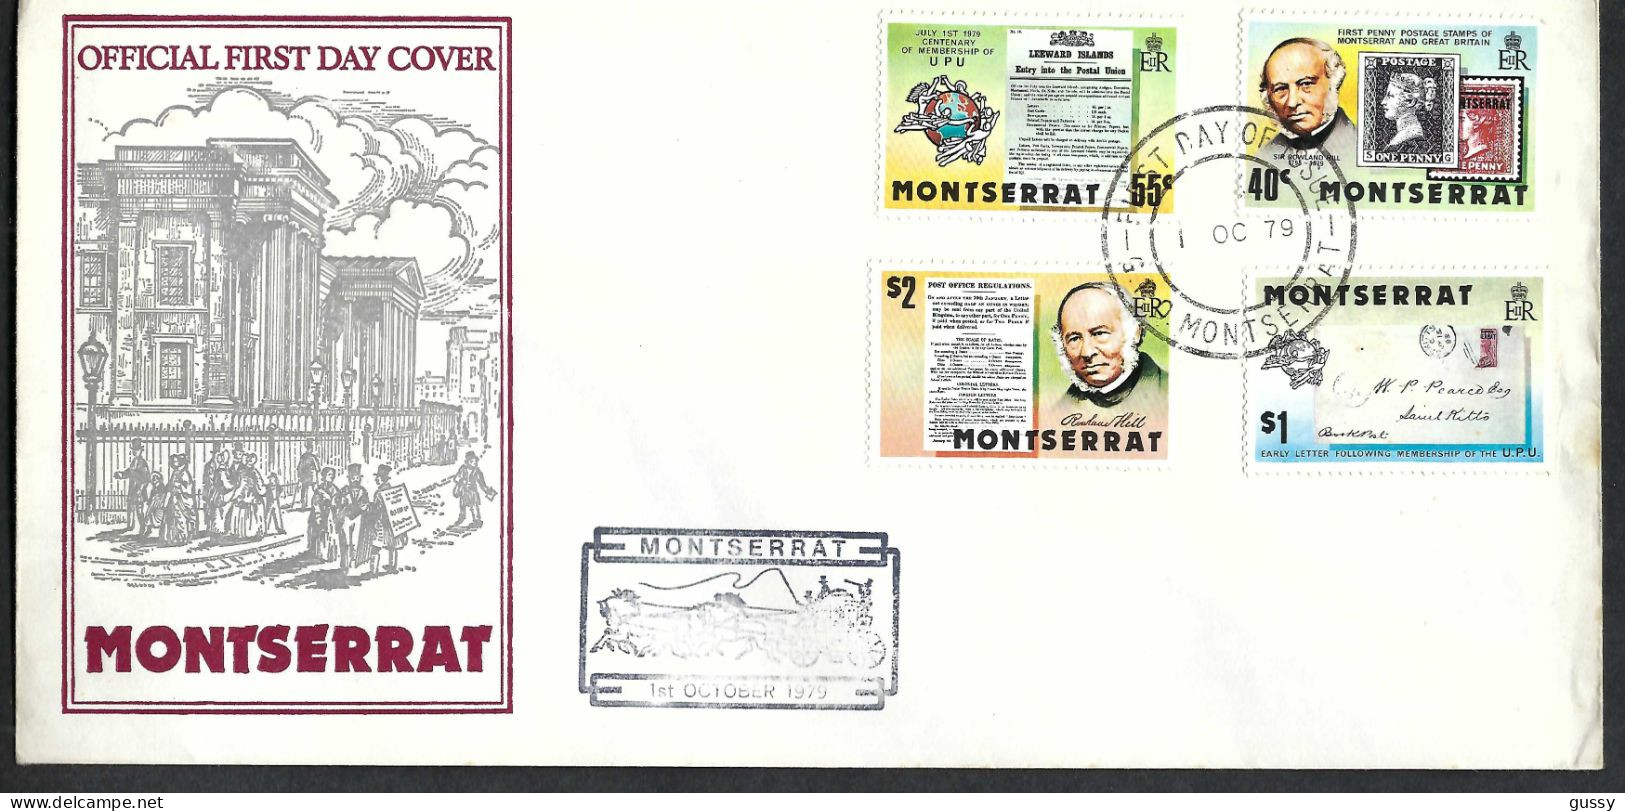 MONTSERRAT Ca.1979: FDC - Montserrat